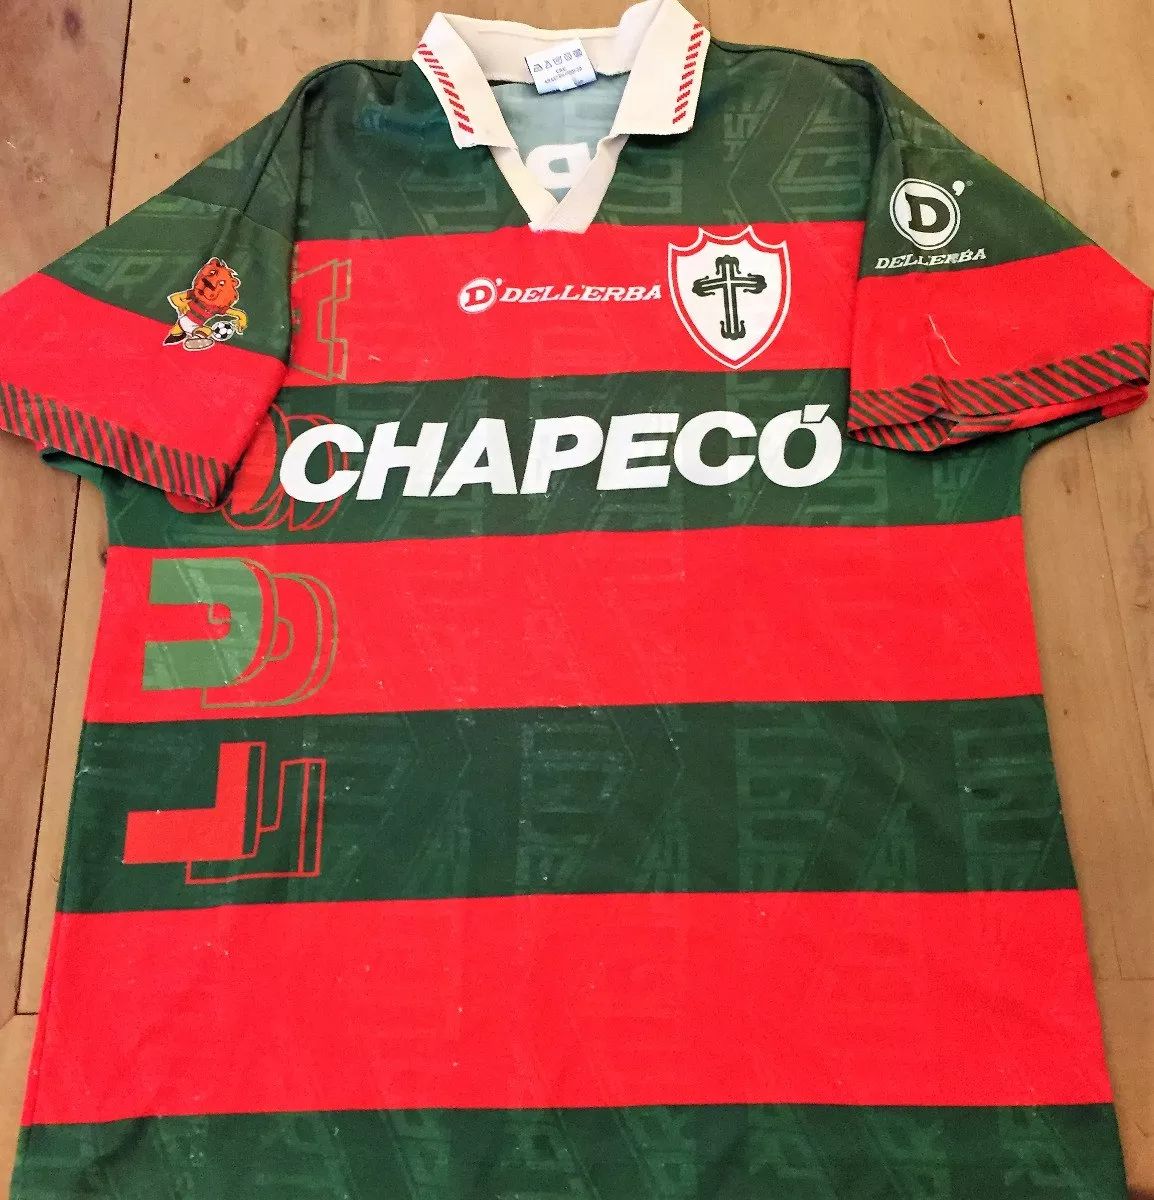 maillot équipe de portuguesa de desportos domicile 1995 pas cher